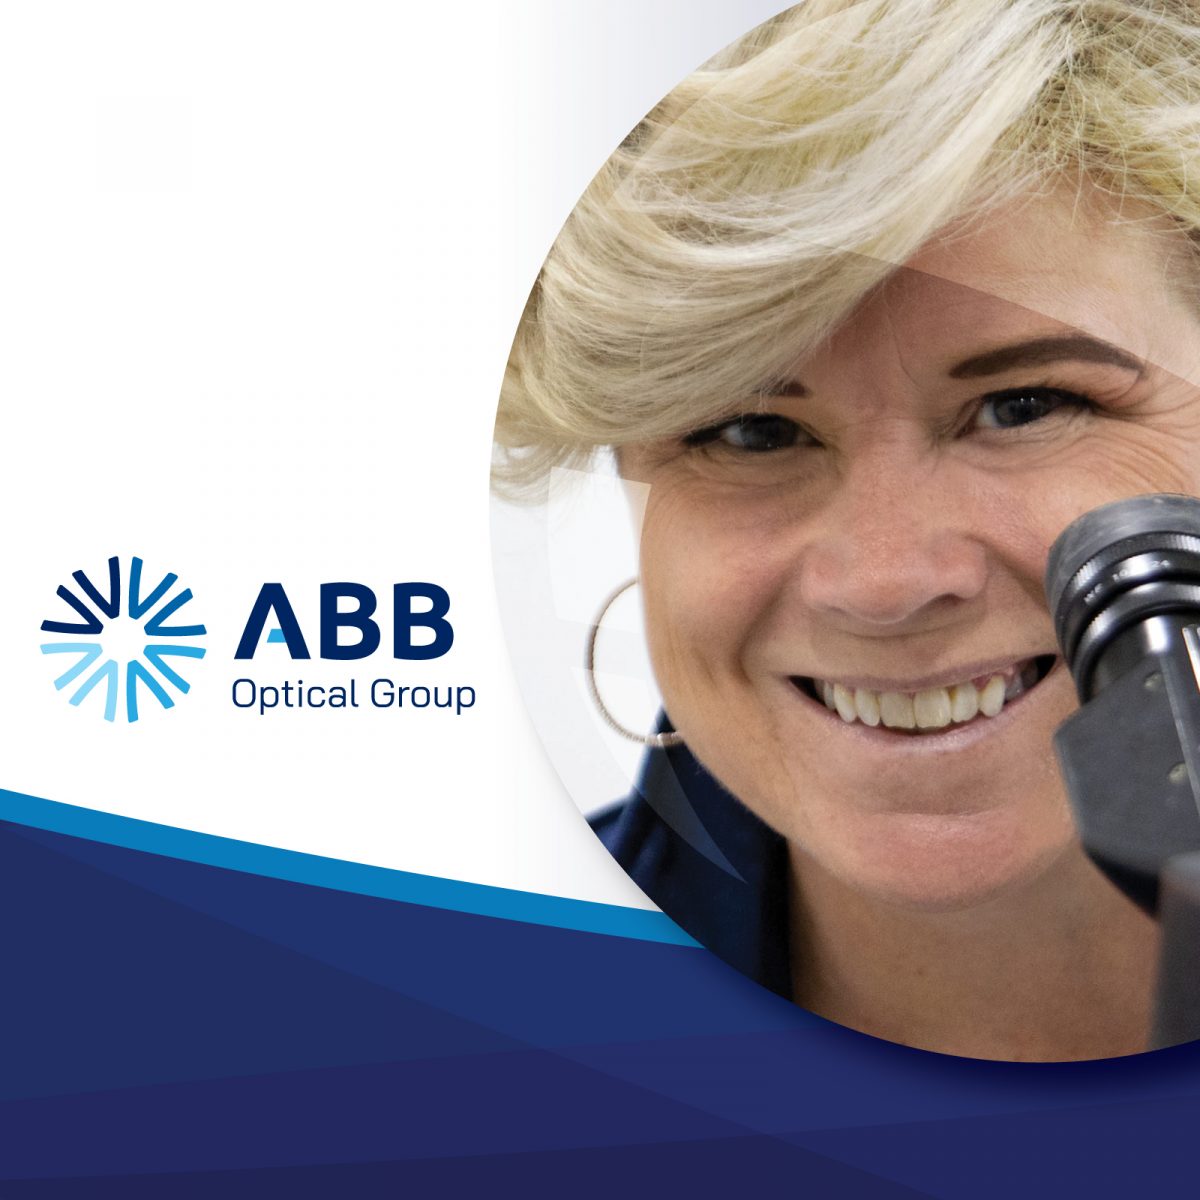 ABB New Brand, Marketing, & Website Strategy [Video]